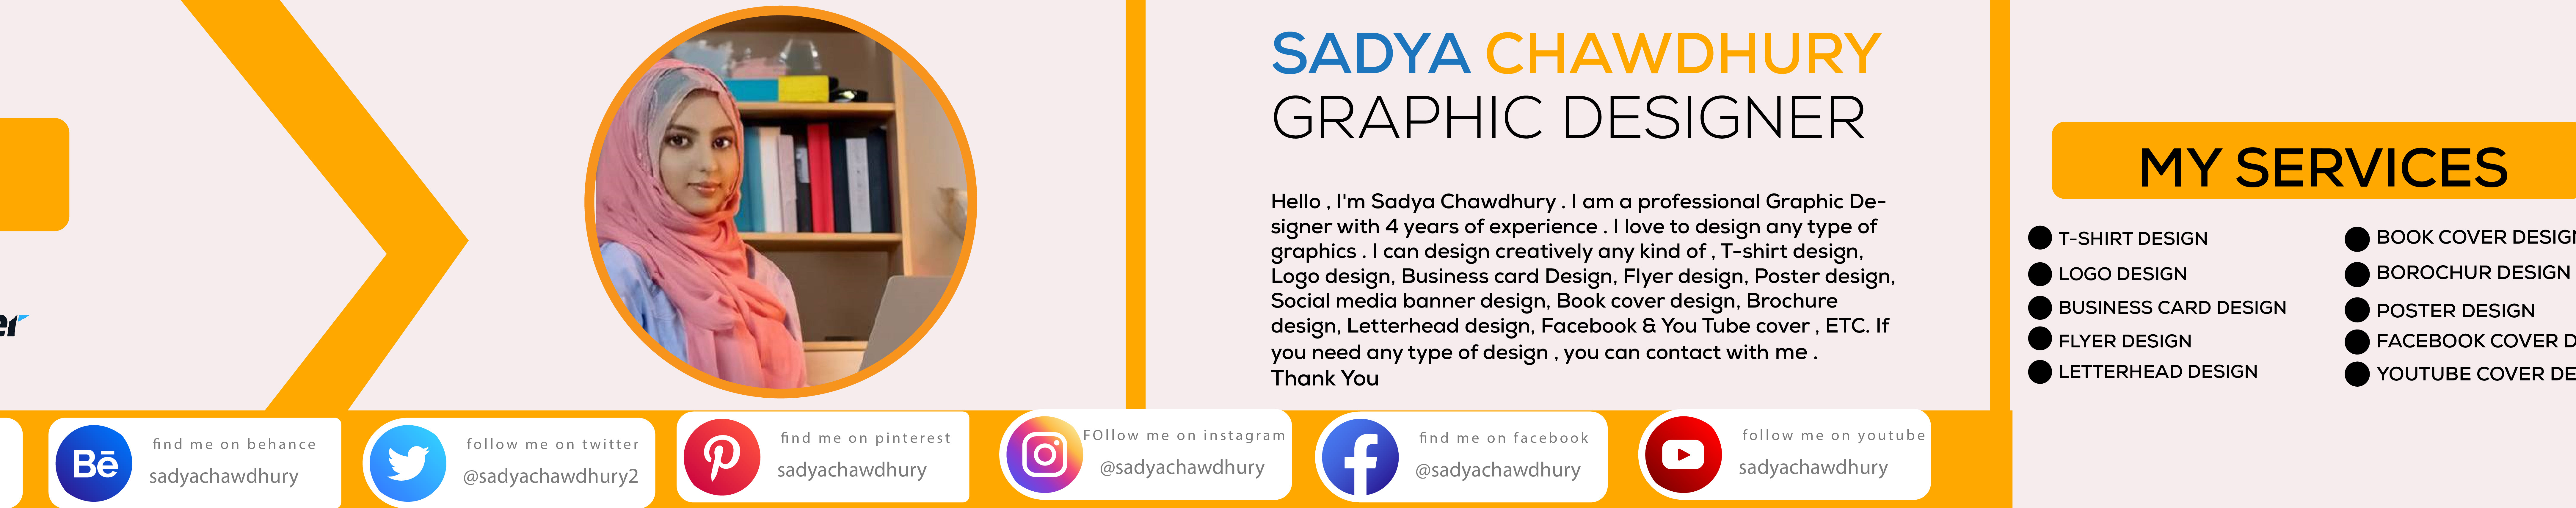 sadya chawdhurys profilbanner